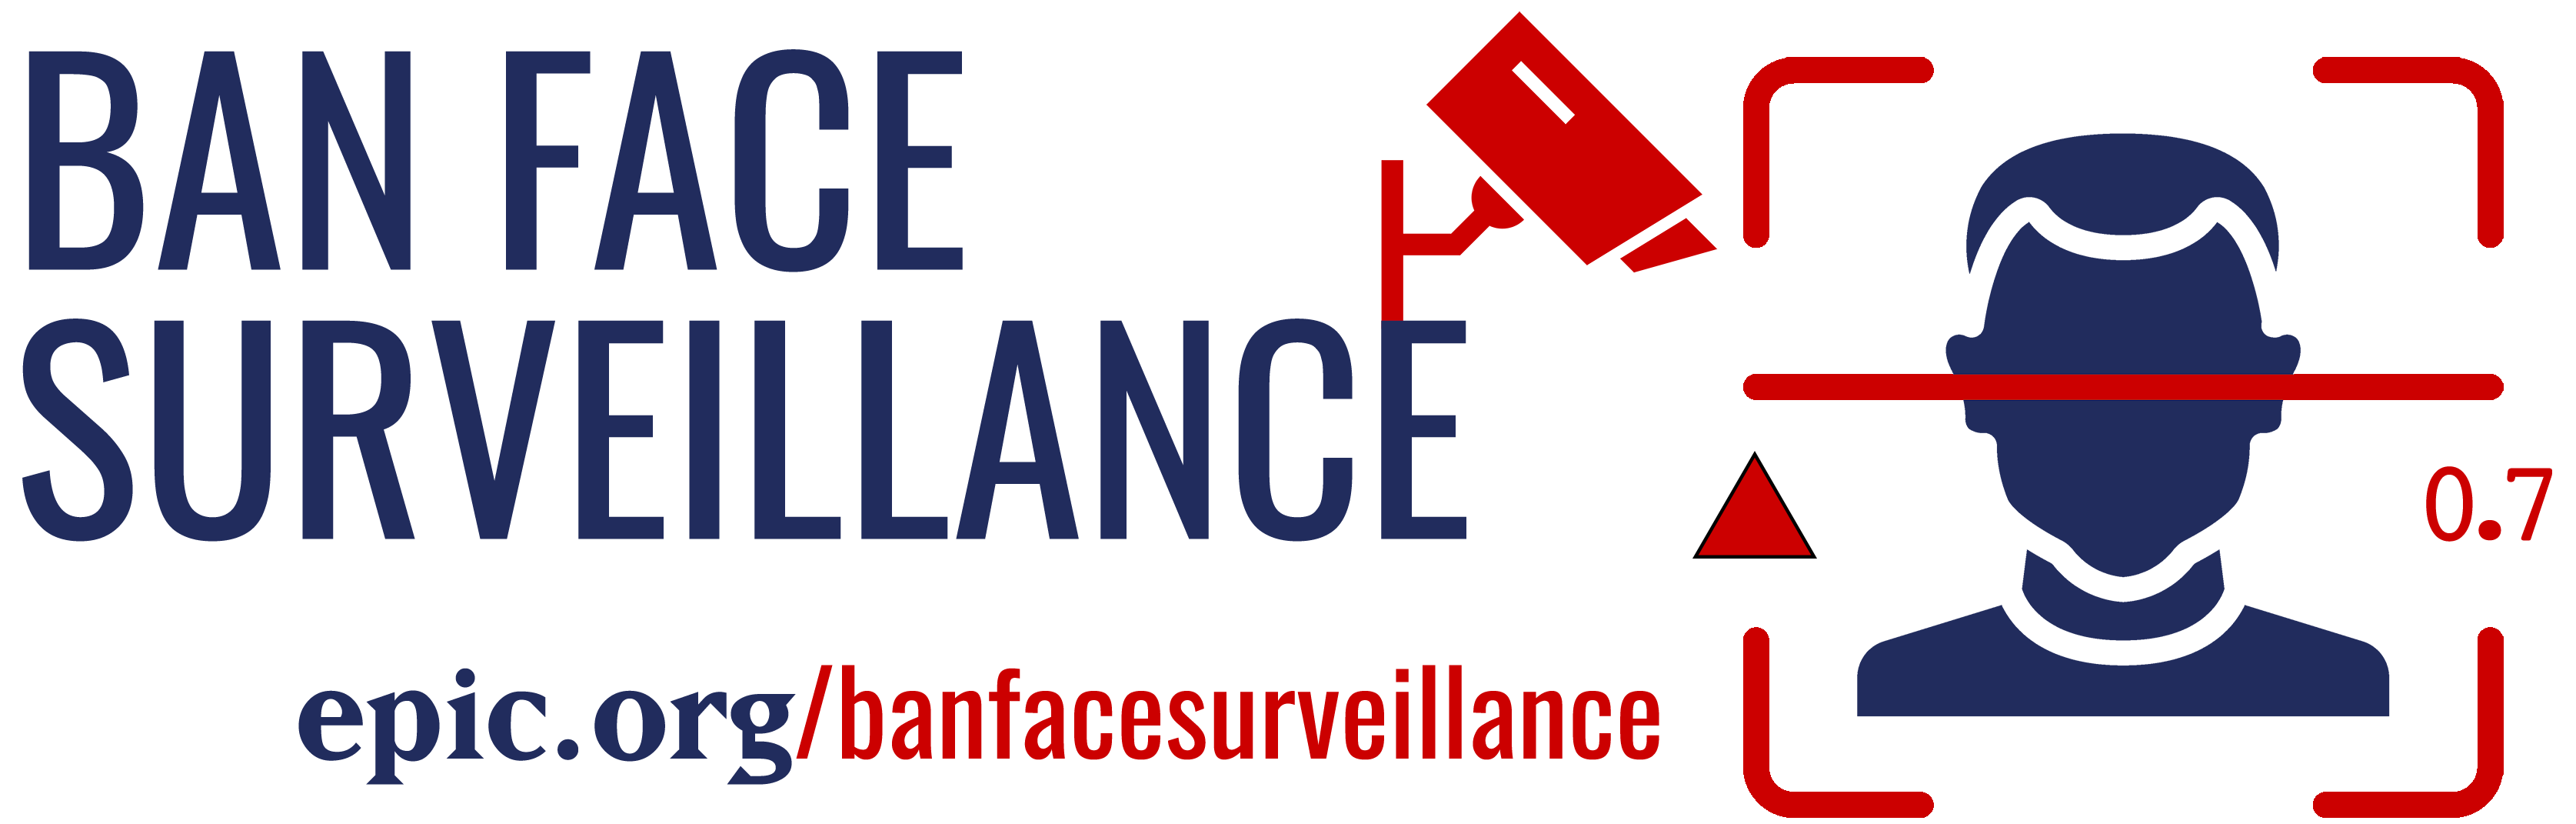 Ban Face Surveillance epic.org/banfacesurveillance